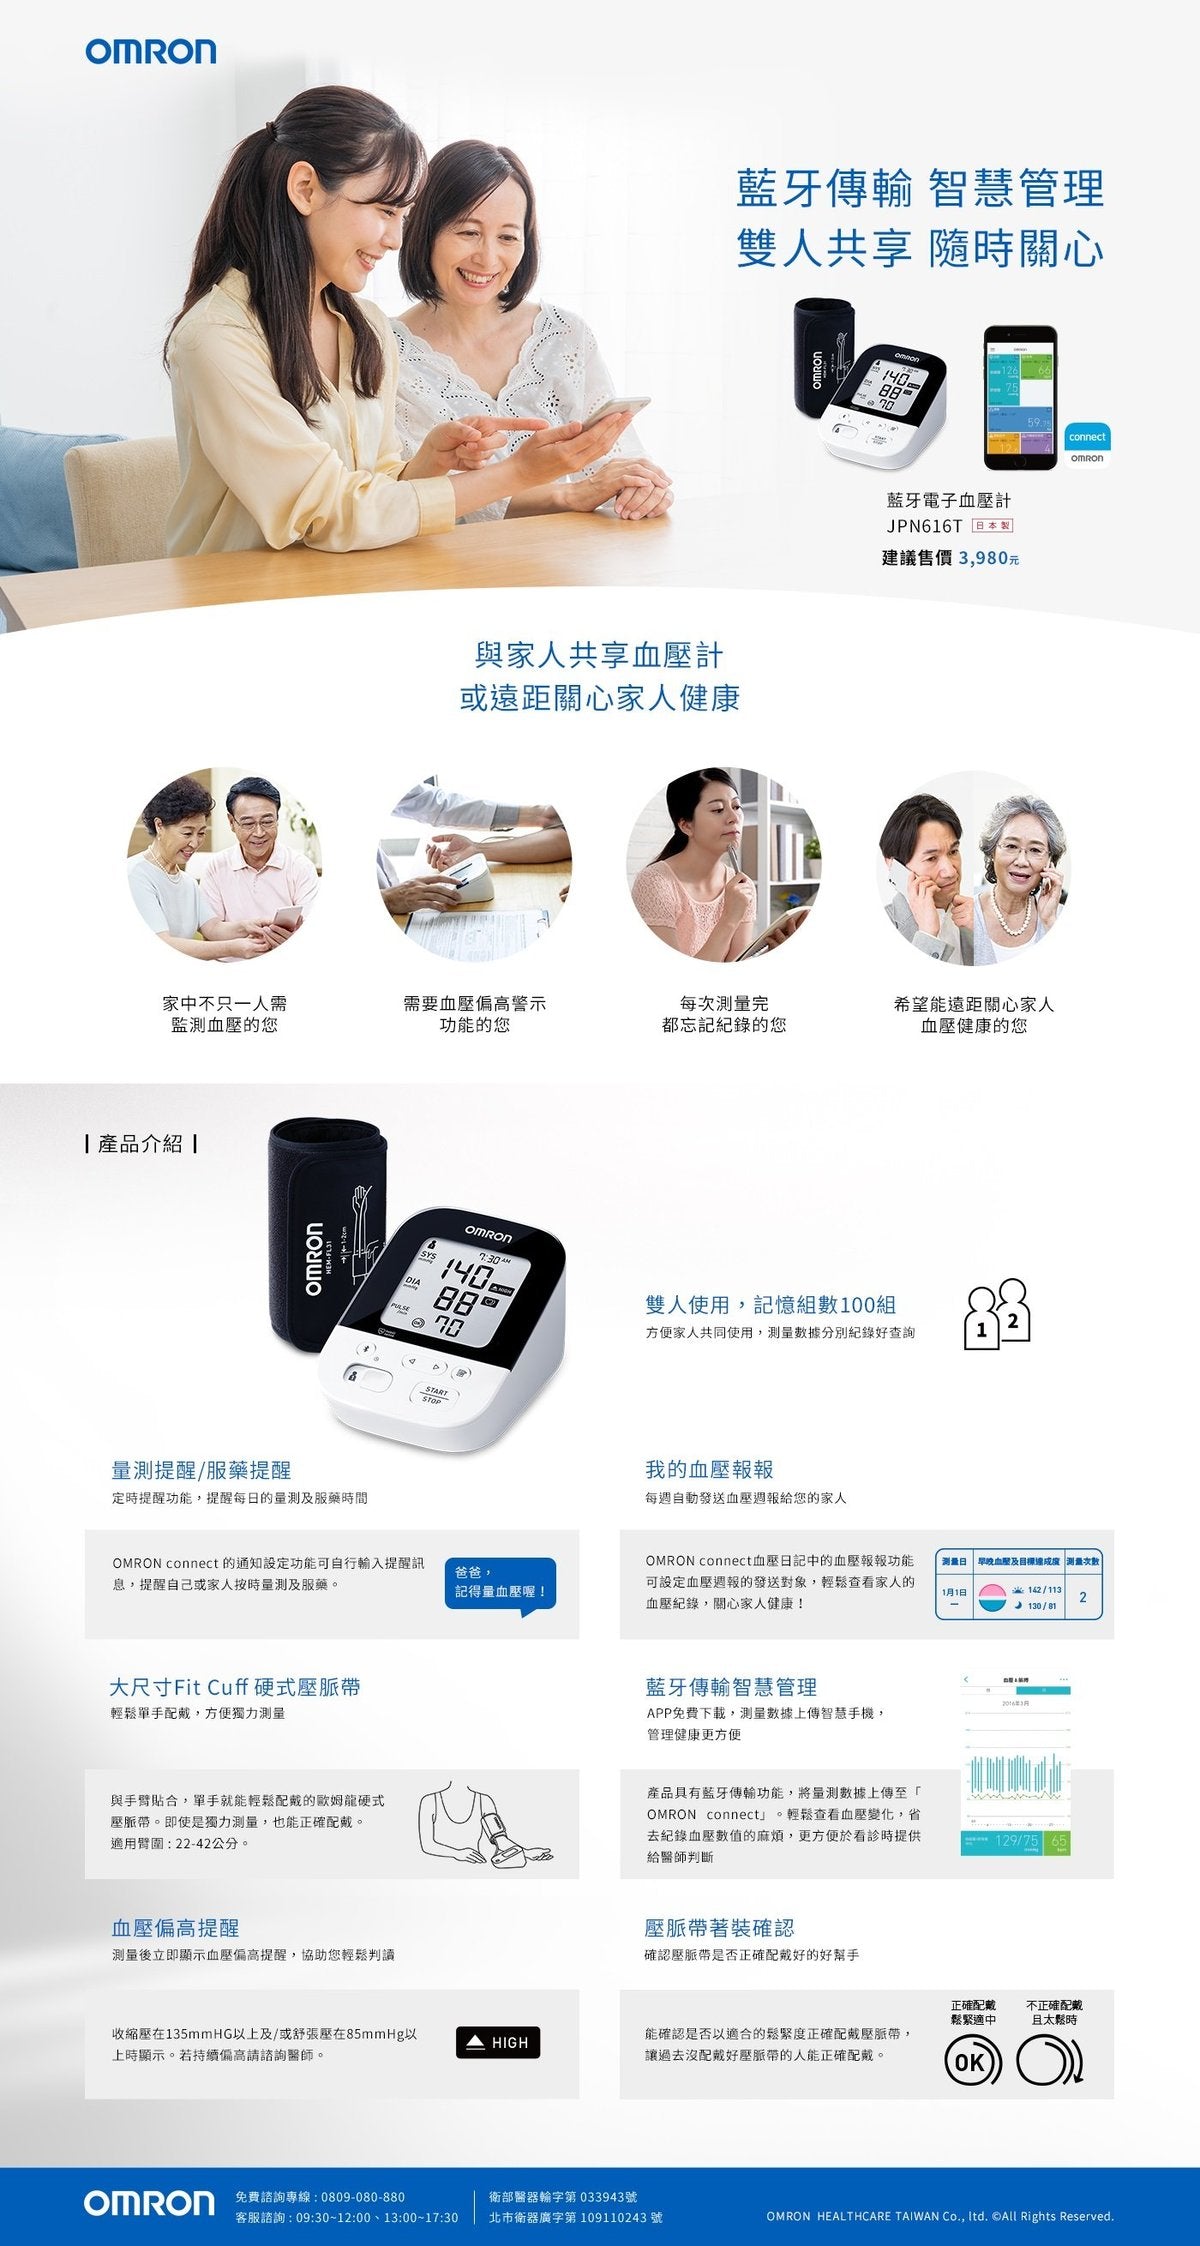 OMRON - JPN616T Bluetooth Arm Blood Pressure Monitor